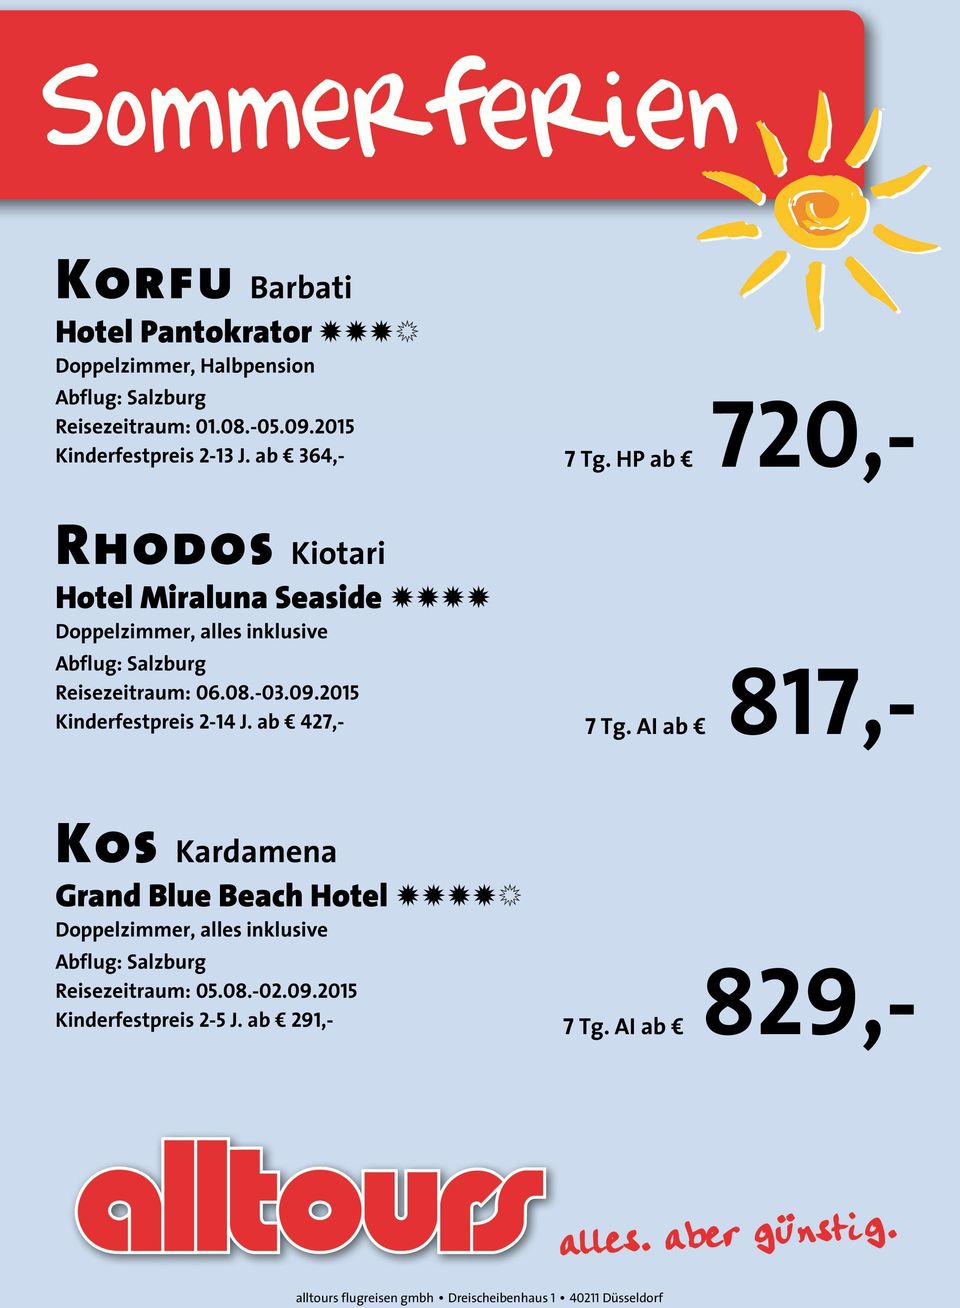 HP ab 720,- Rhodos Kiotari Hotel Miraluna Seaside NNNN Reisezeitraum: 06.08.-03.09.